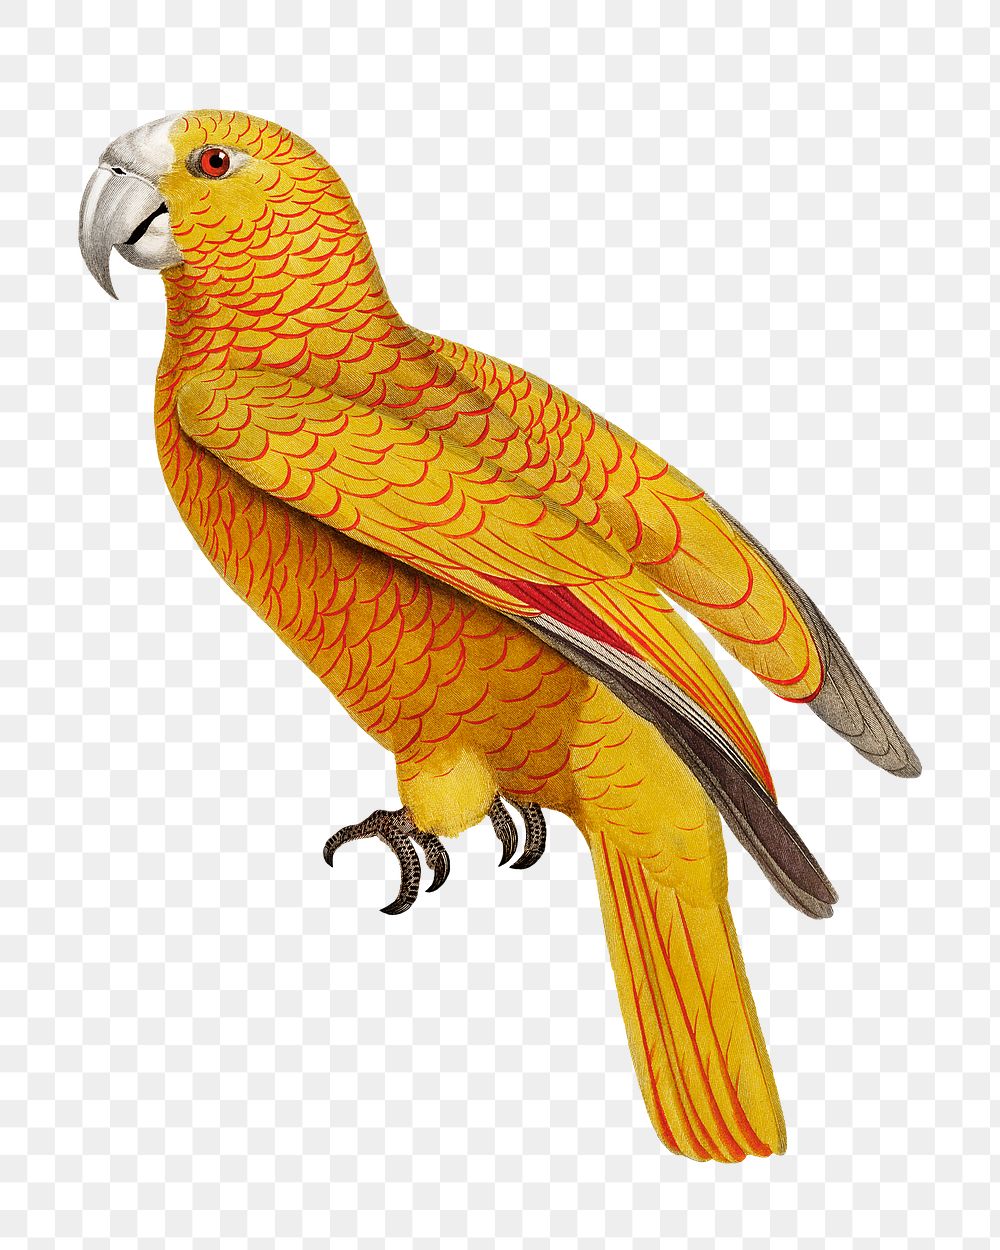 Paradise of Cuba parrot png bird sticker, vintage animal illustration, transparent background